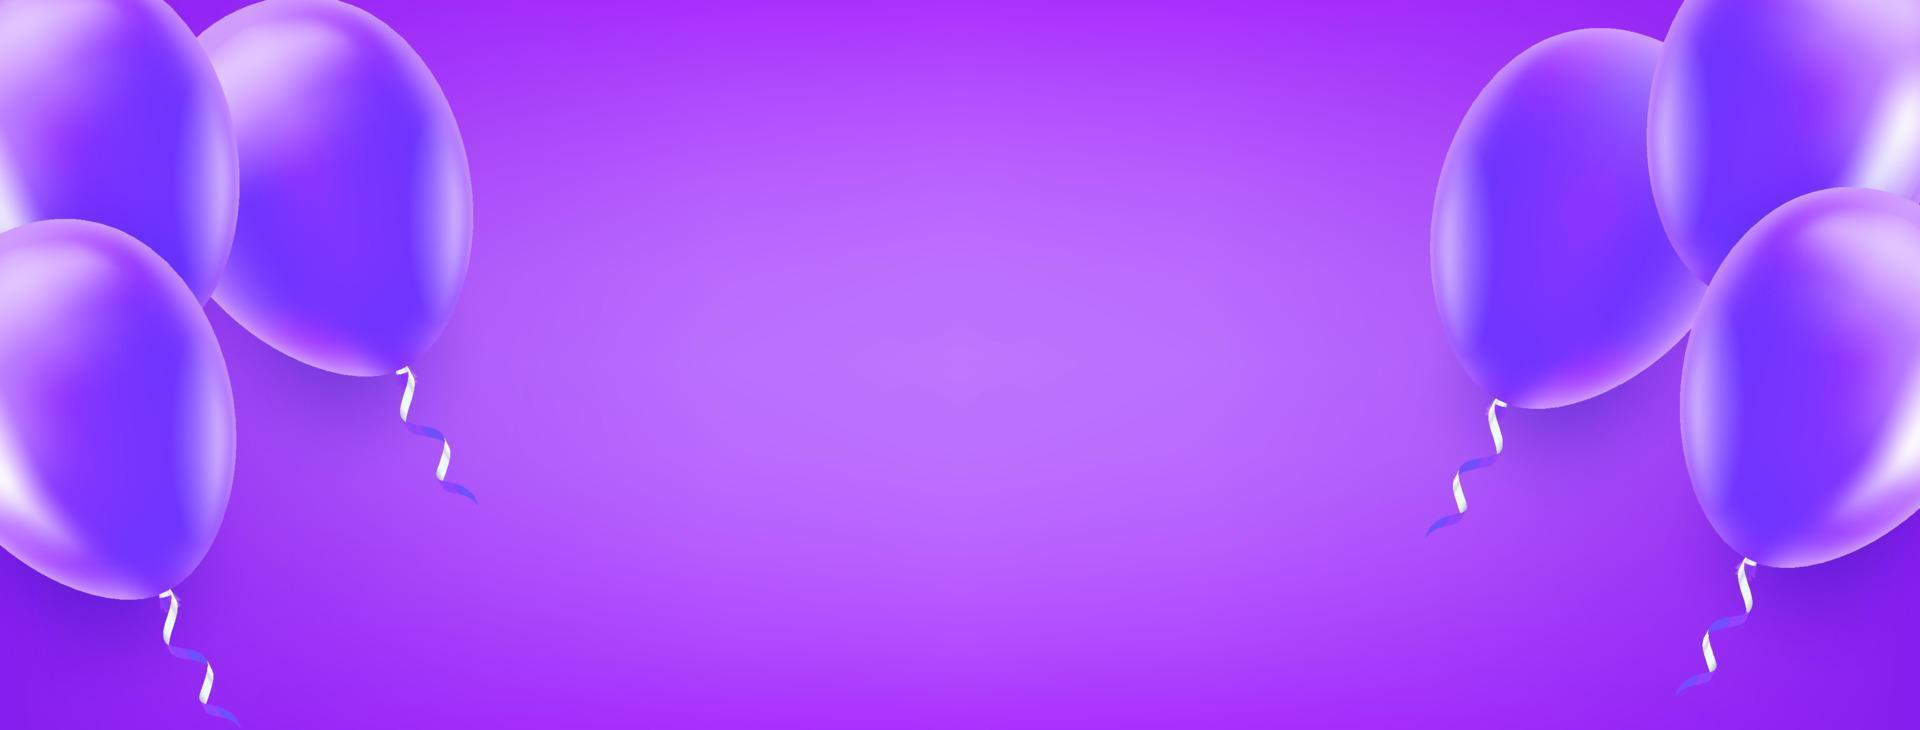 encabezado ancho con globos de aire violeta. Banner de orientación horizontal vectorial 3d con espacio de copia vector